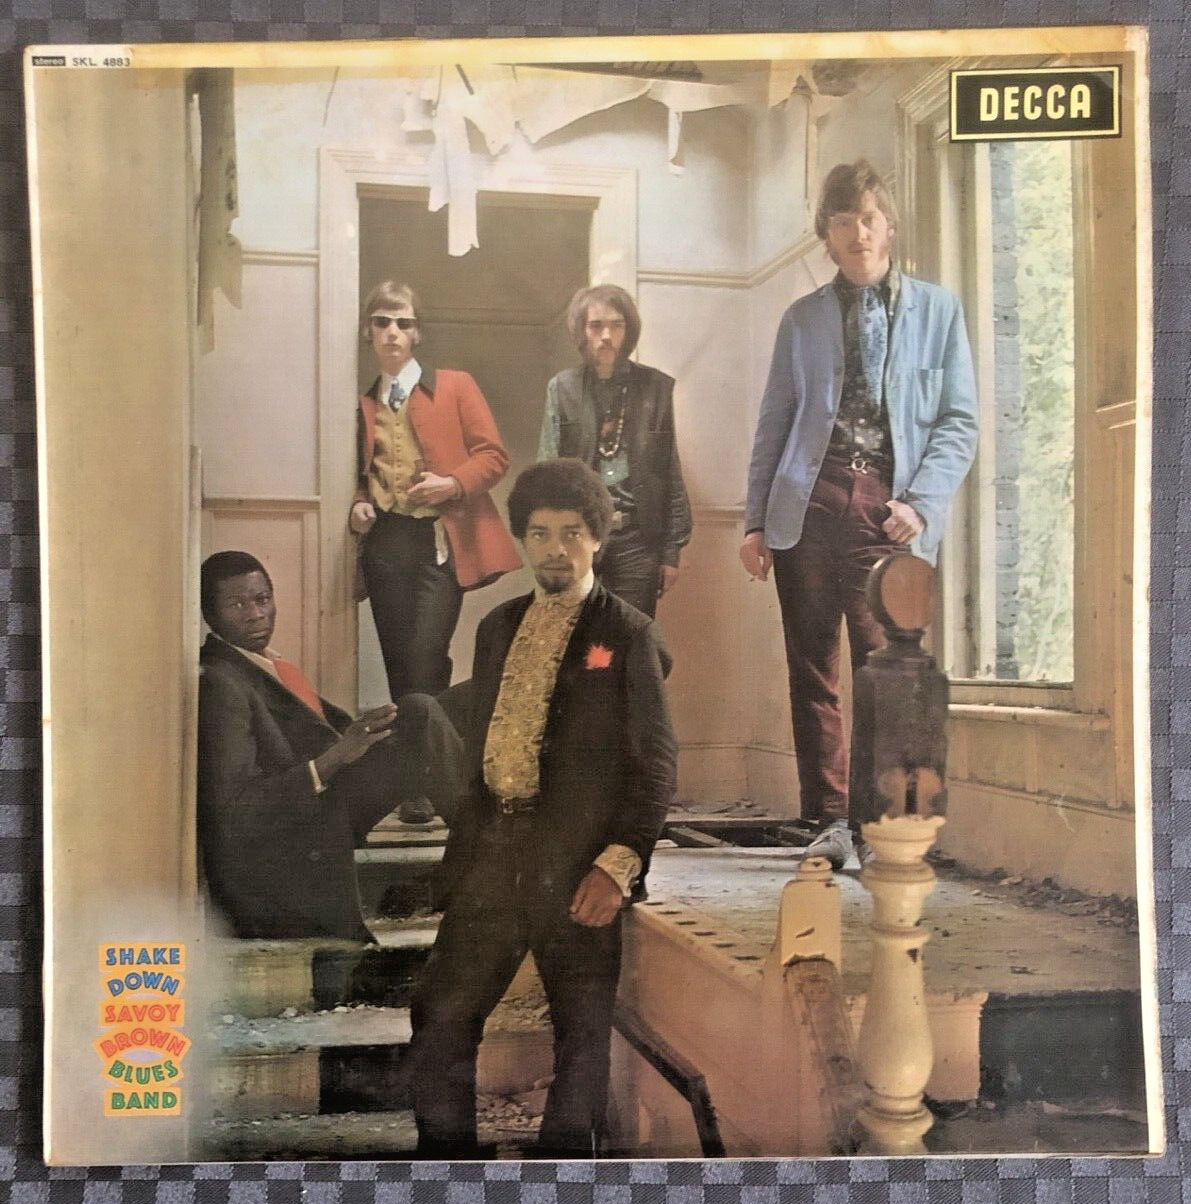 UK SAVOY BROWN BLUES BAND Shake Down LP (Decca SKL 4883) excellent +